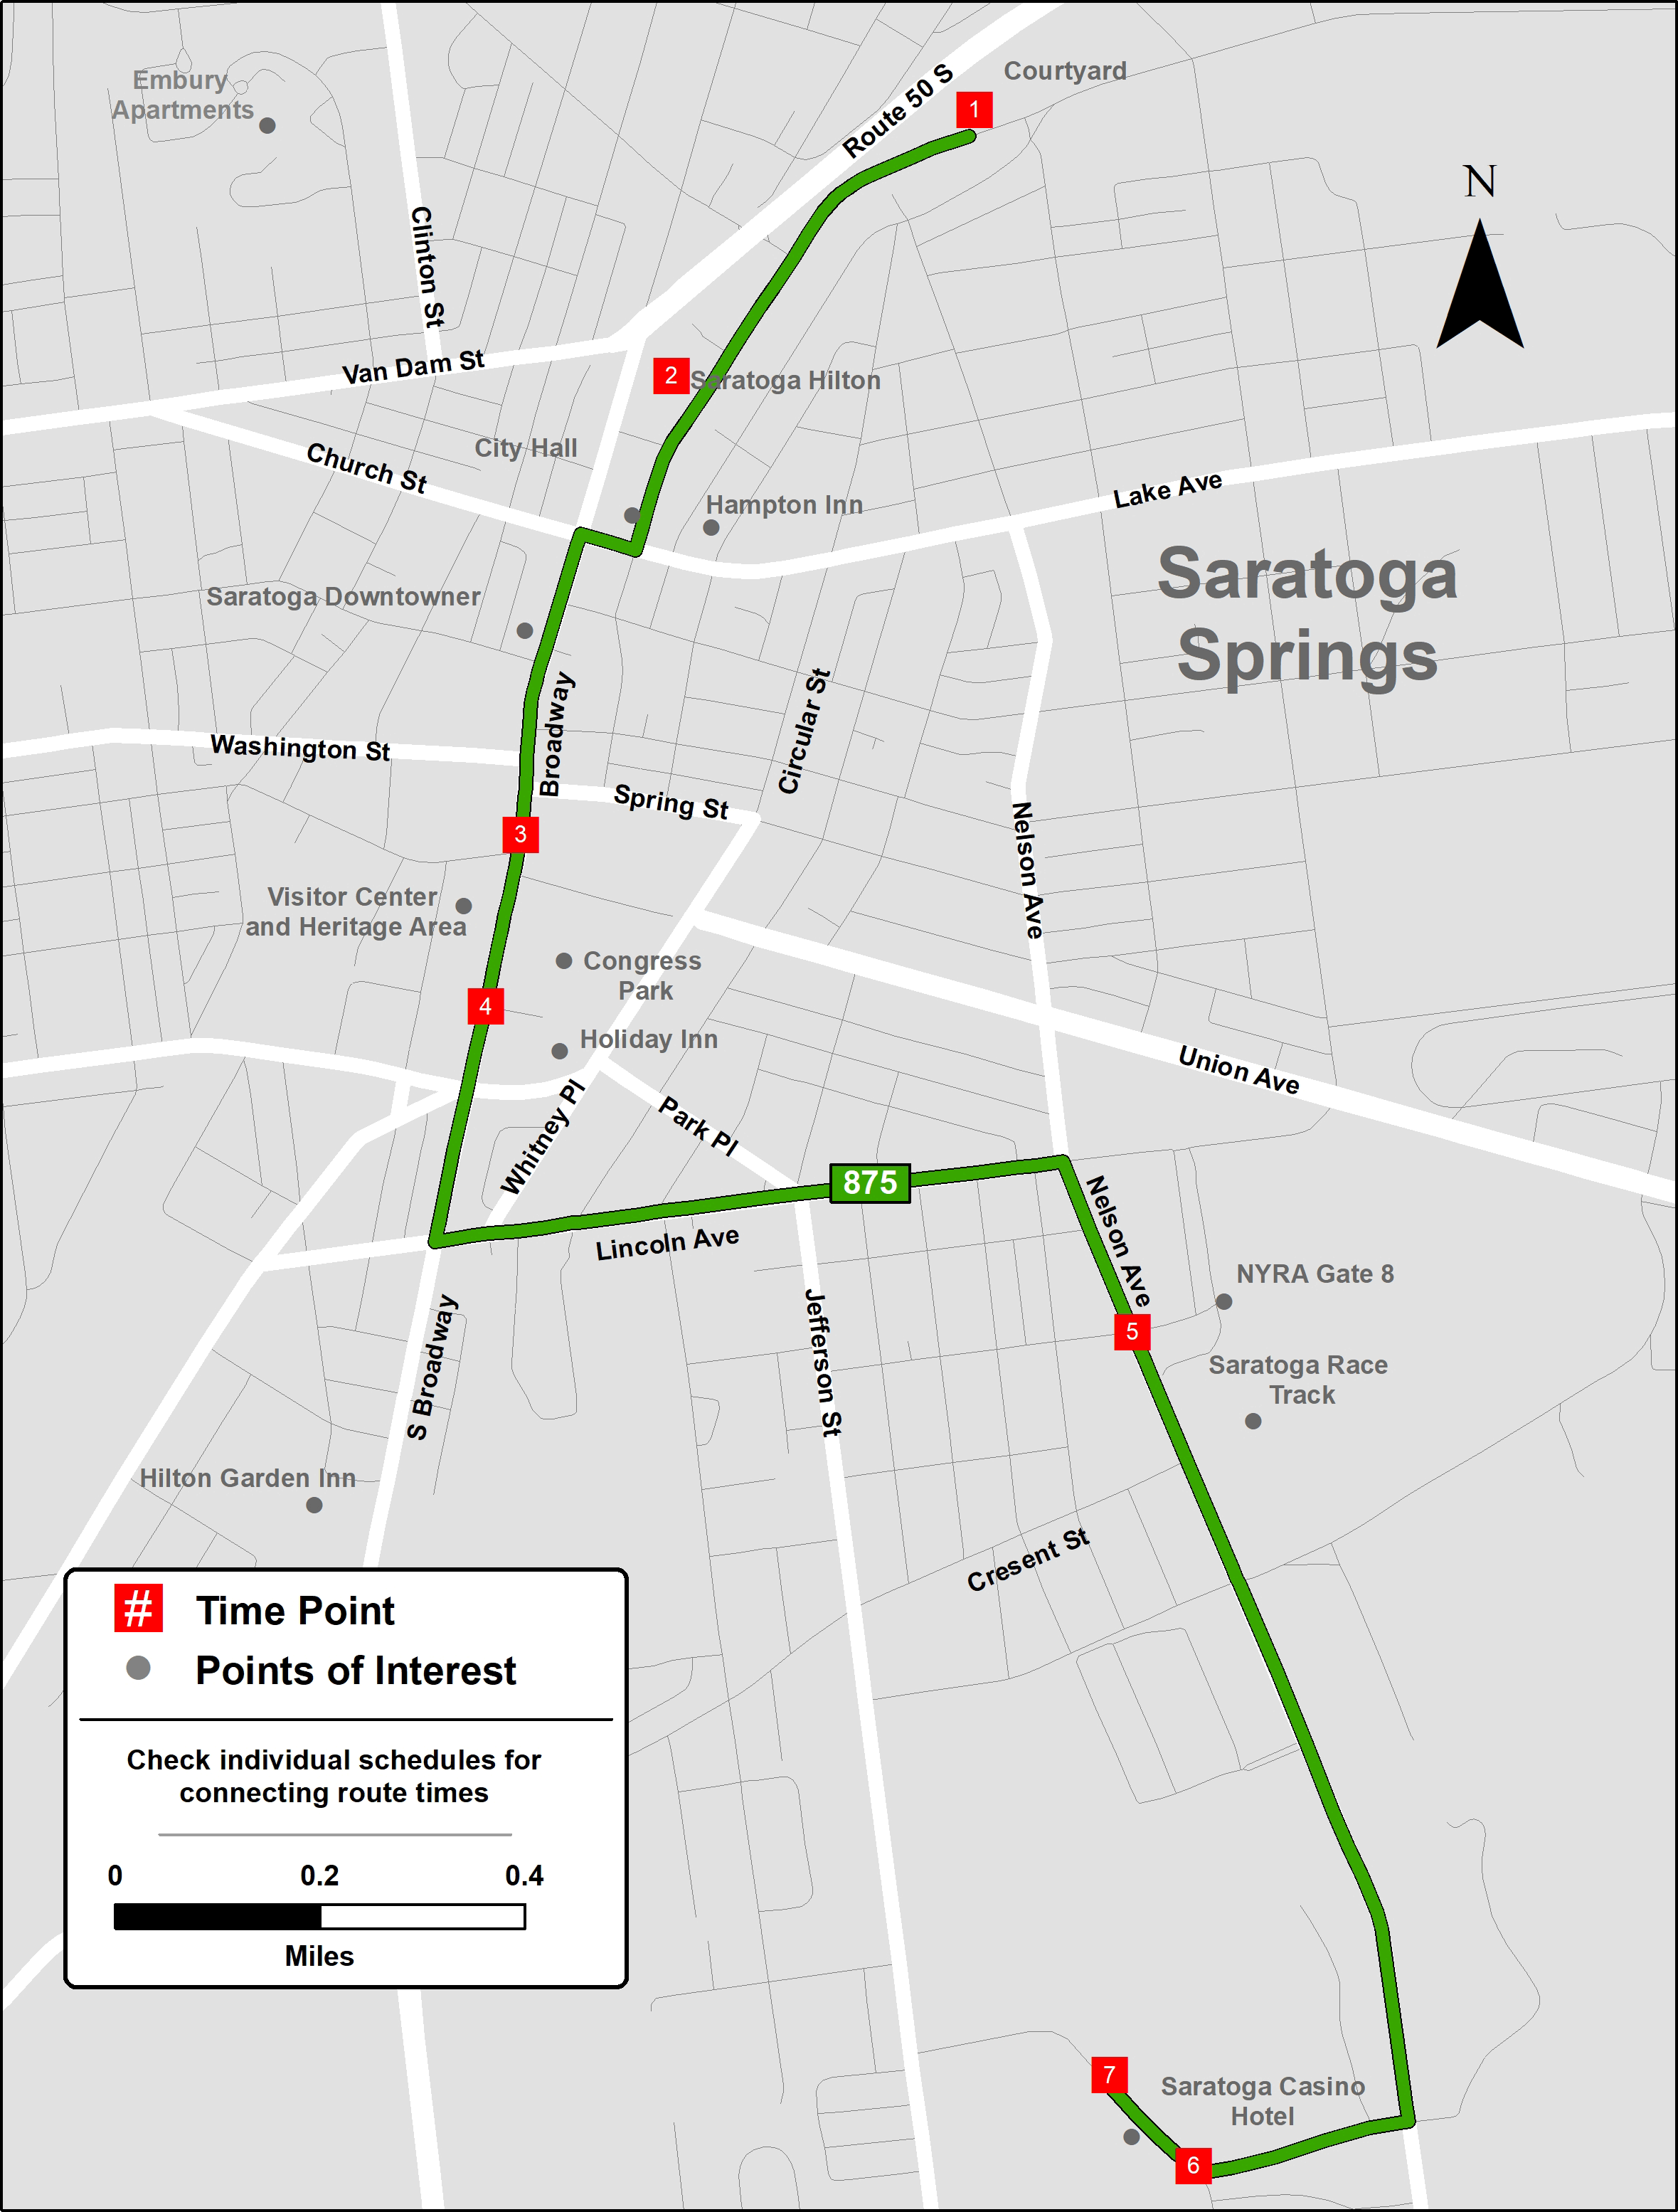 Route 875 - Saratoga Trolley